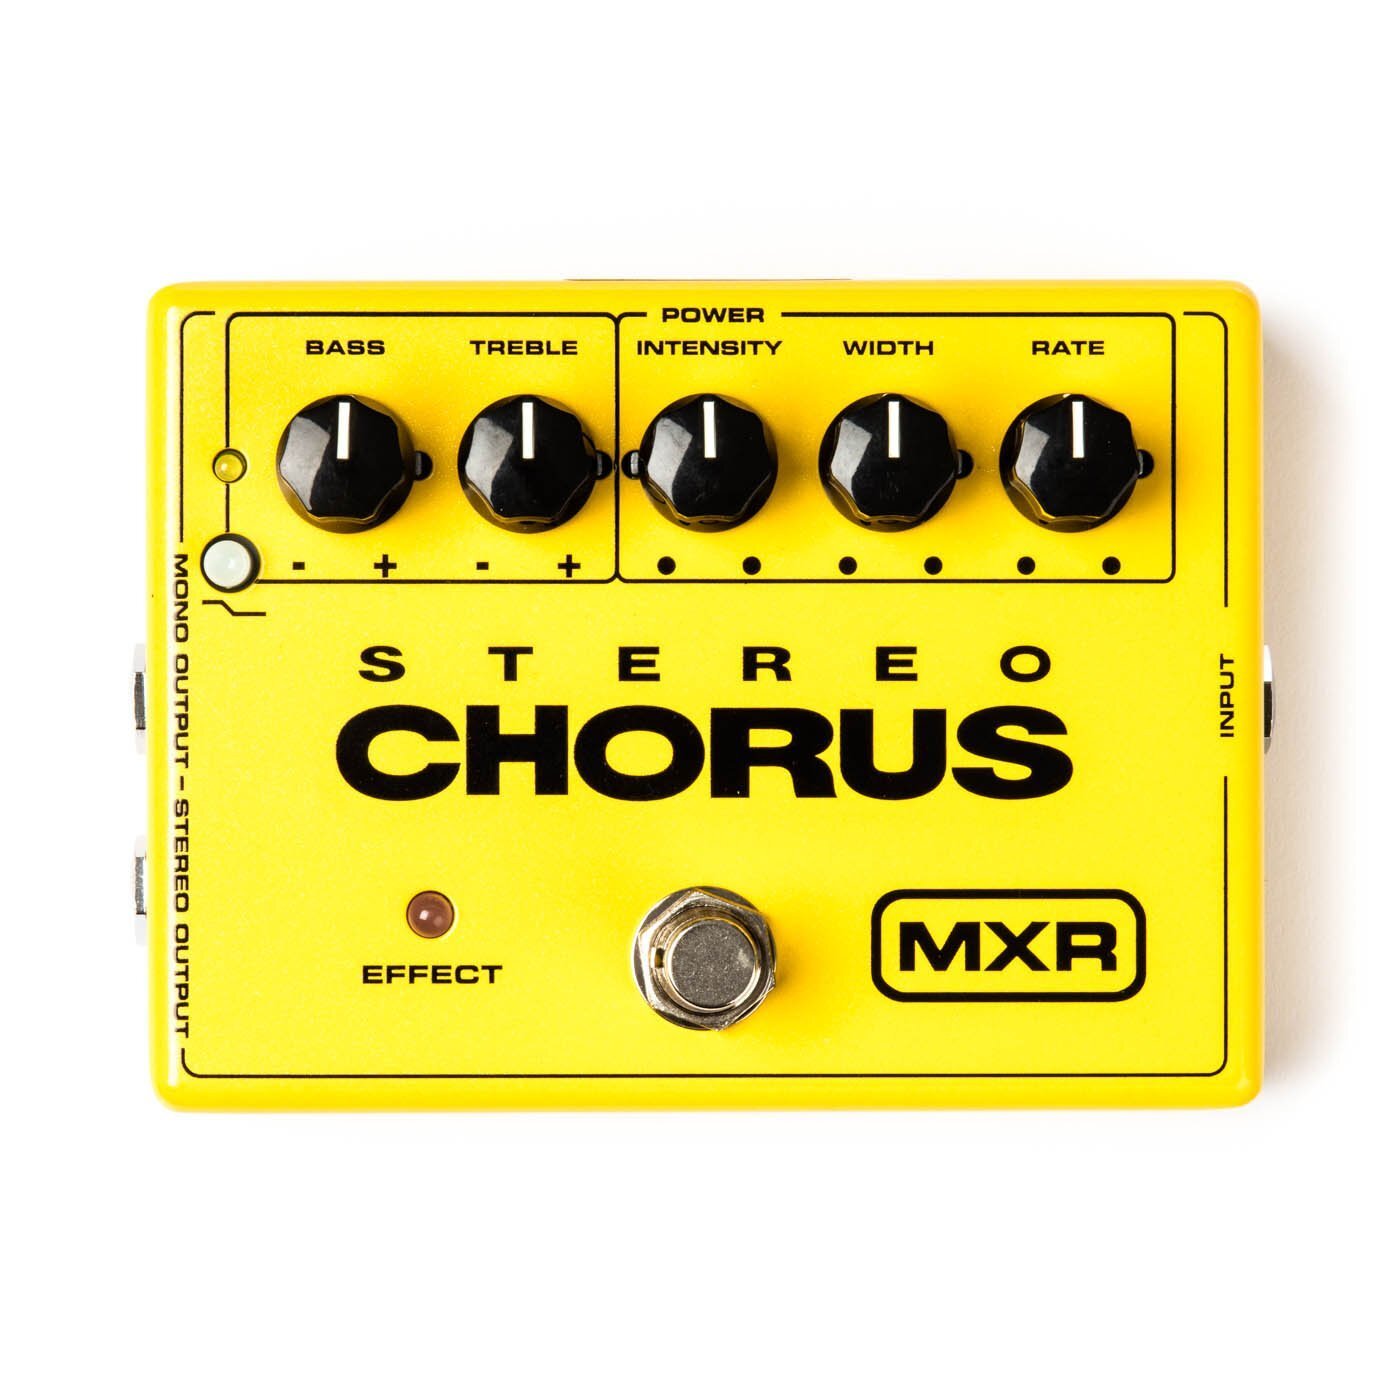 MXR Stereo Chorus M134 Effects Pedal